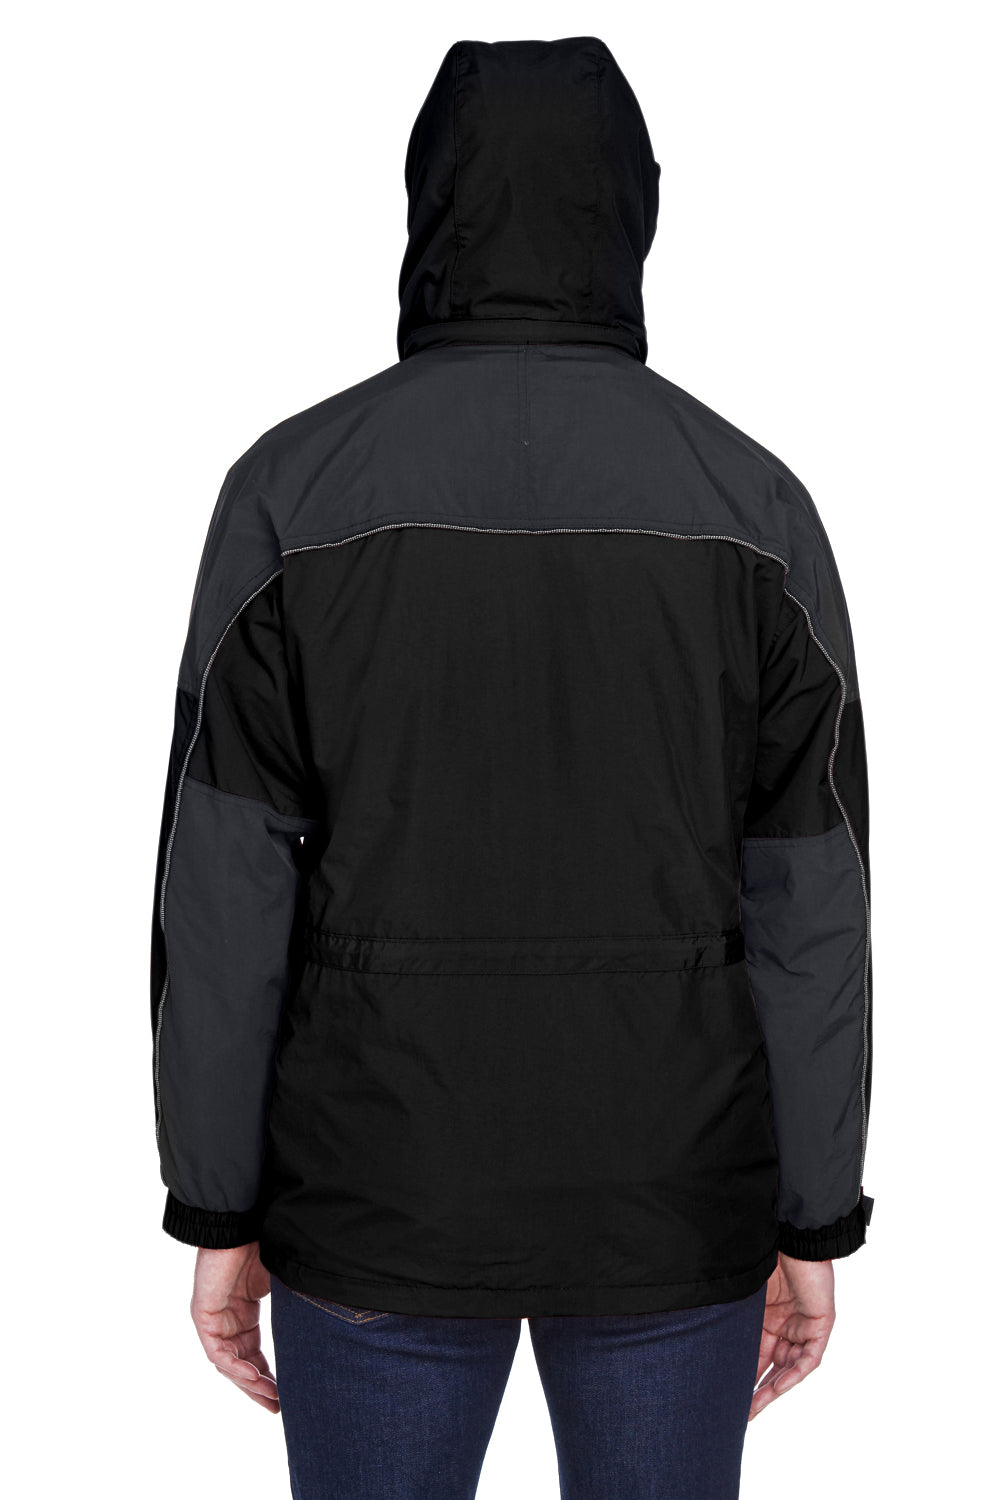 North End 88006 Mens 3-in-1 Full Zip Hooded Jacket Black/Grey Back